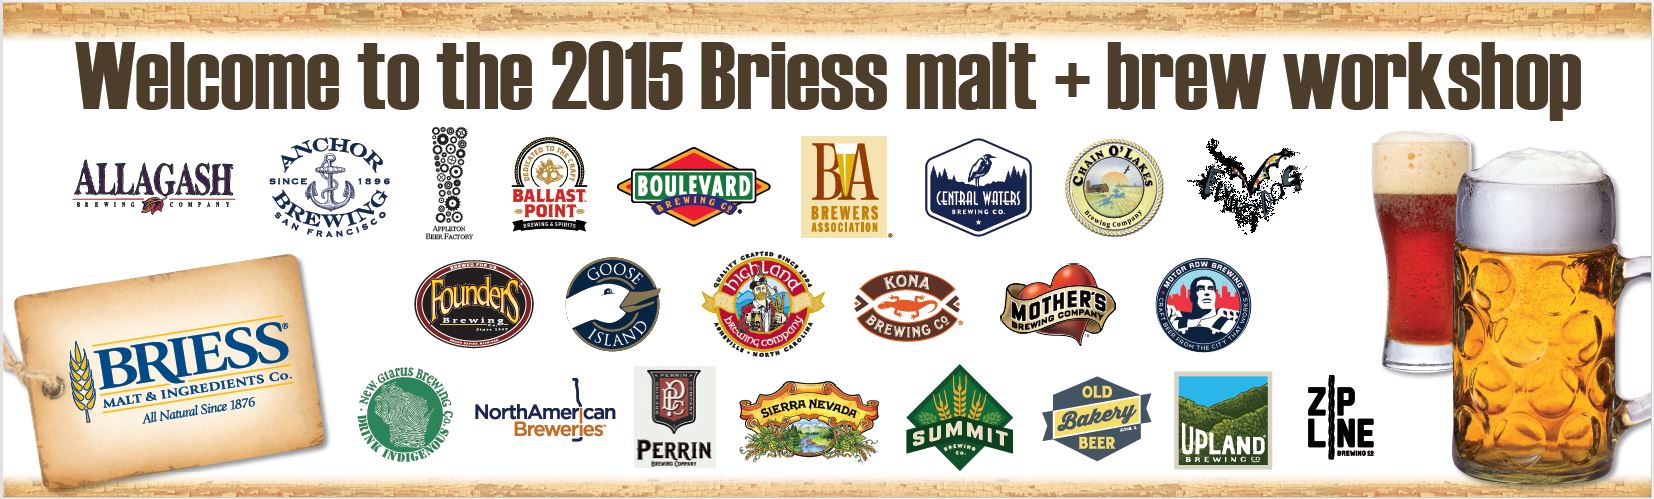 Welcome to the 2015 Briess Malt + Brew Workshop